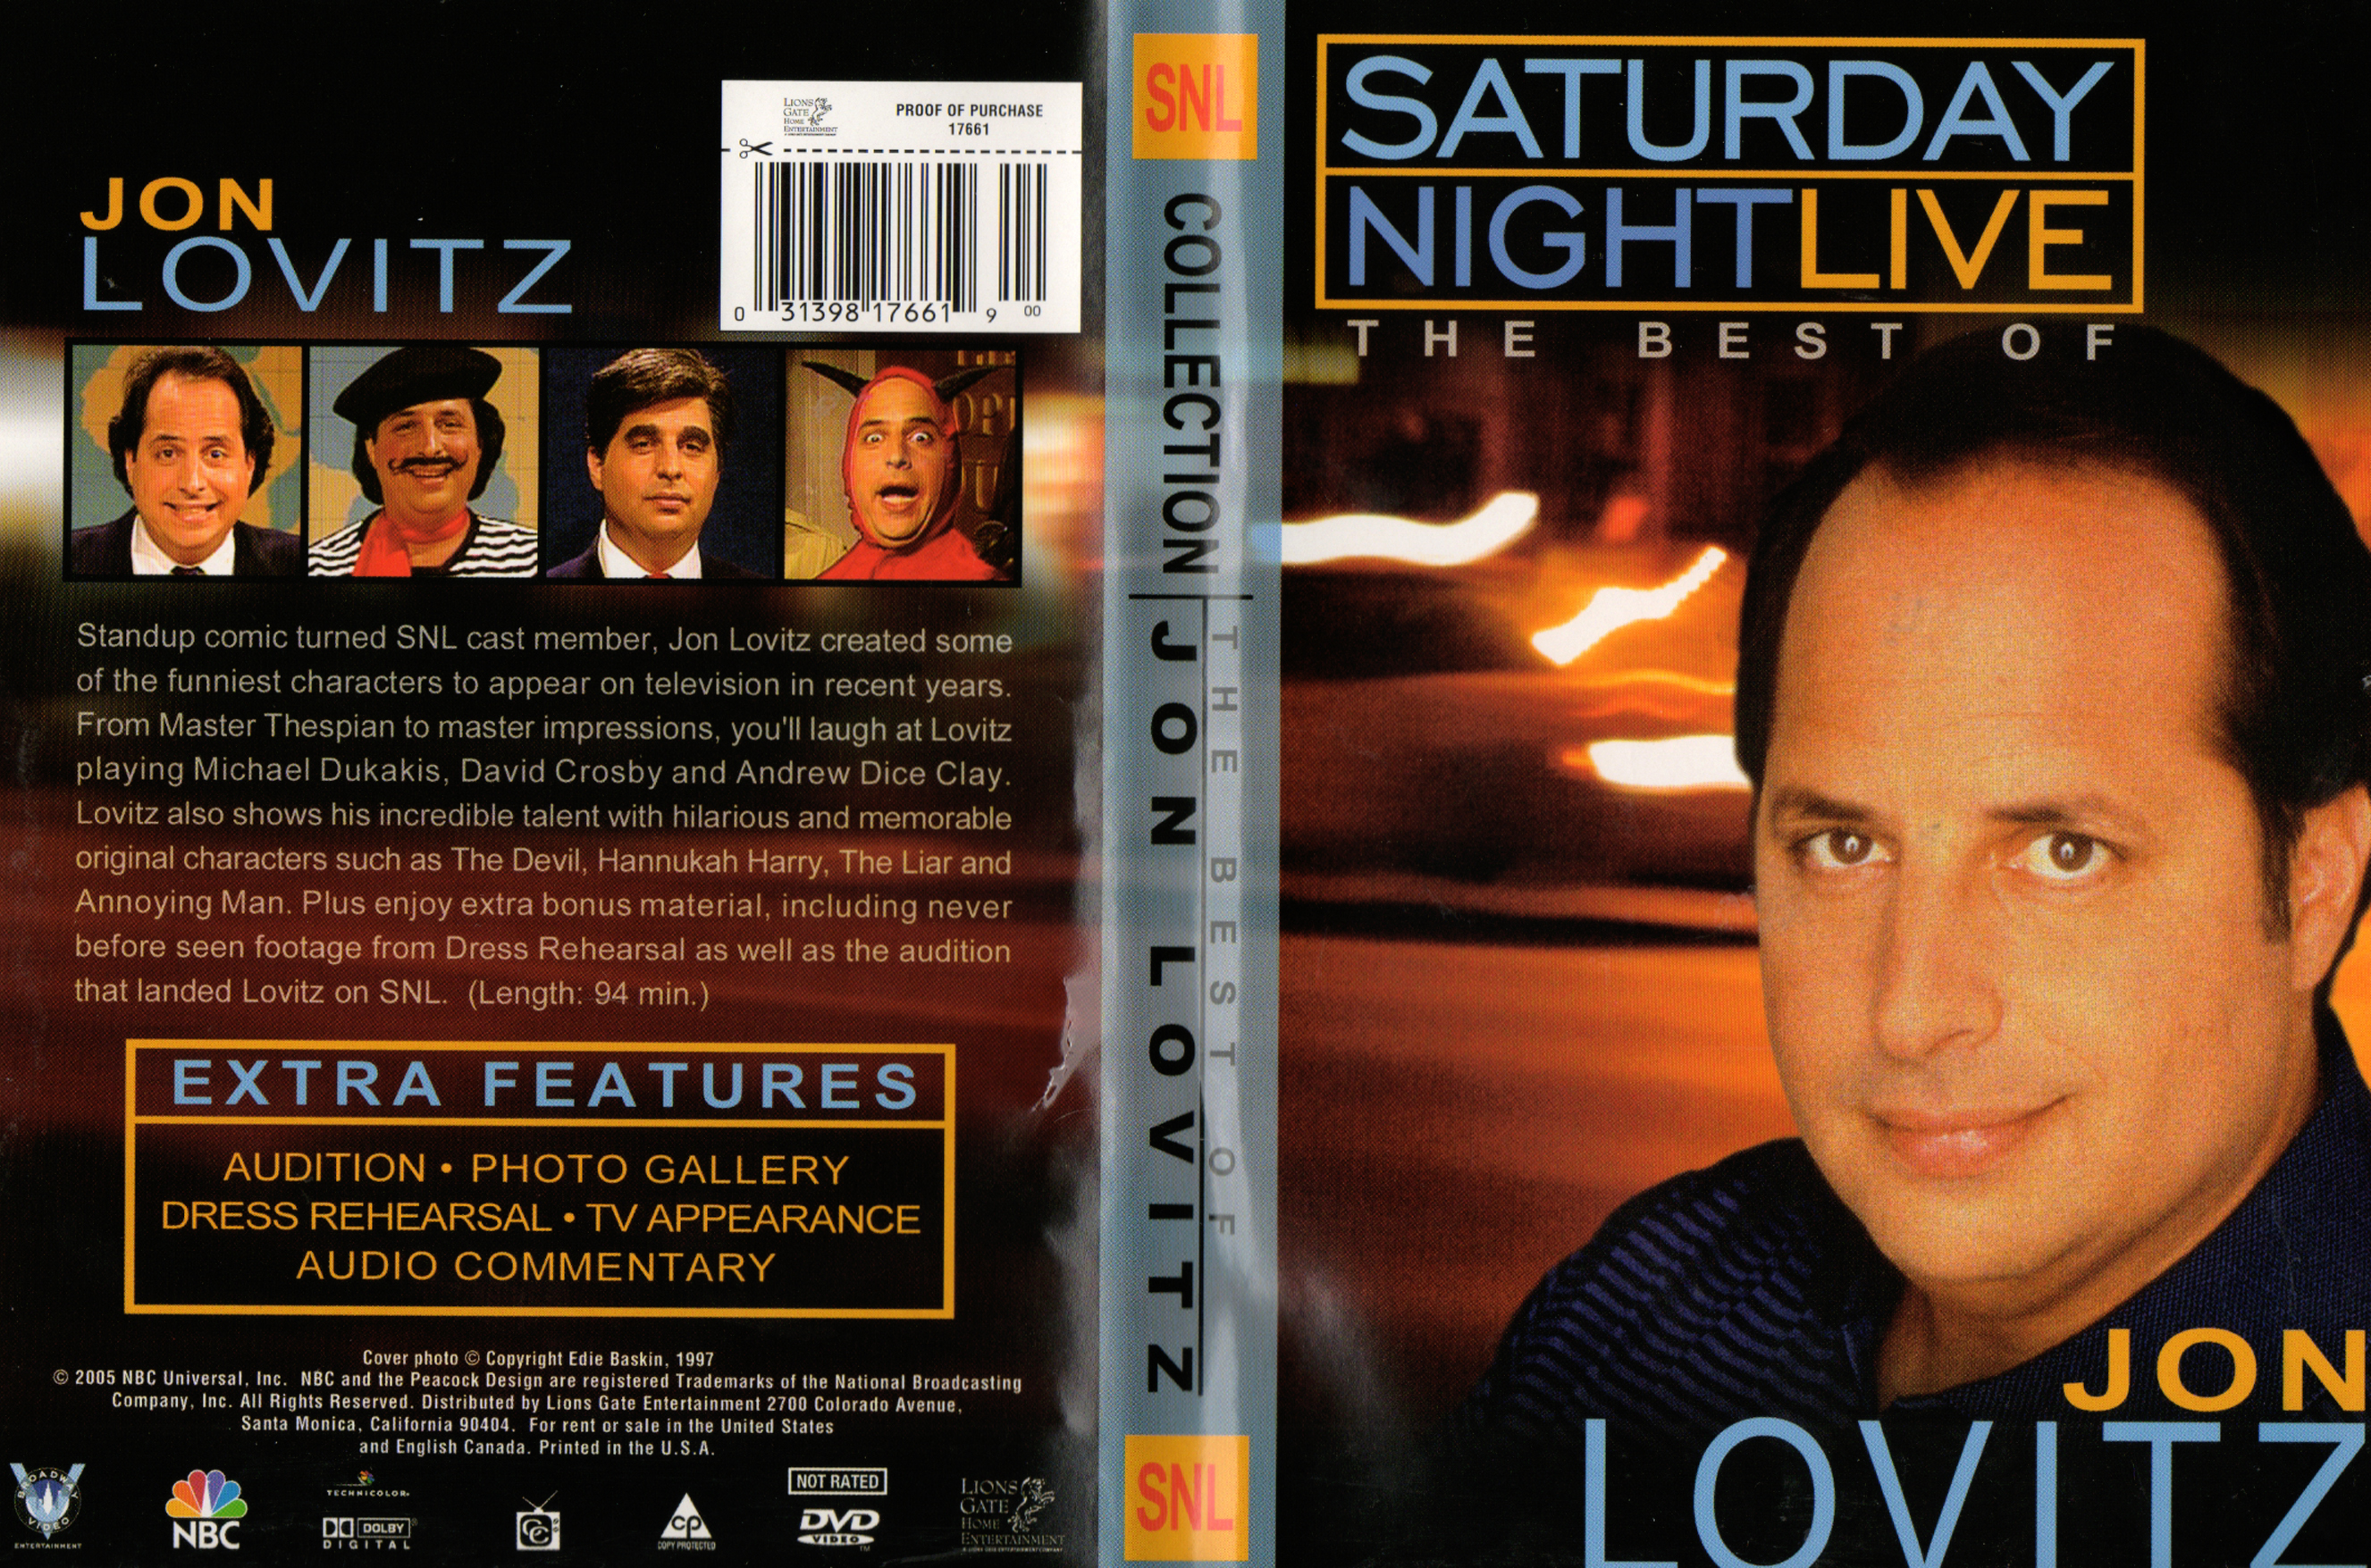 Jaquette DVD Saturday night live - Jon Lovitz